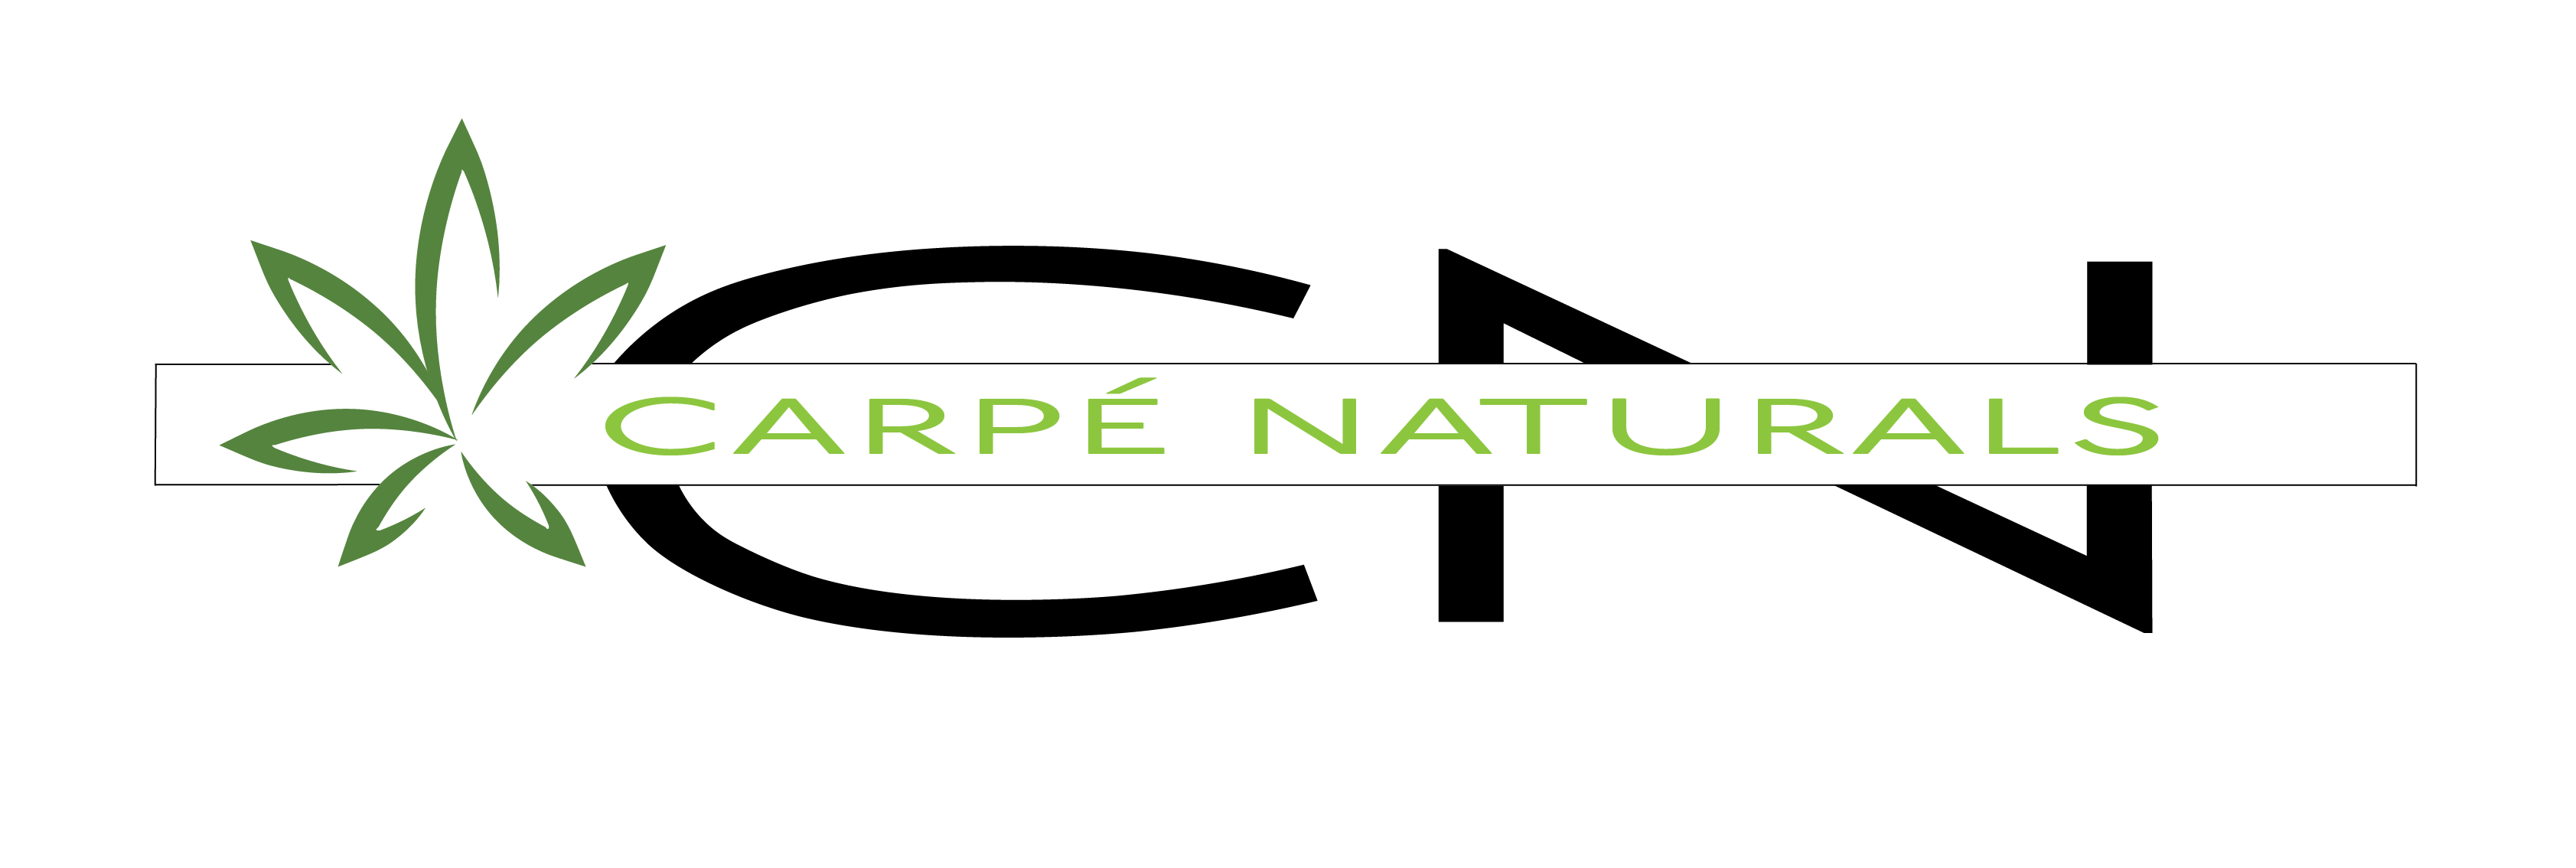 complete nutrition logo